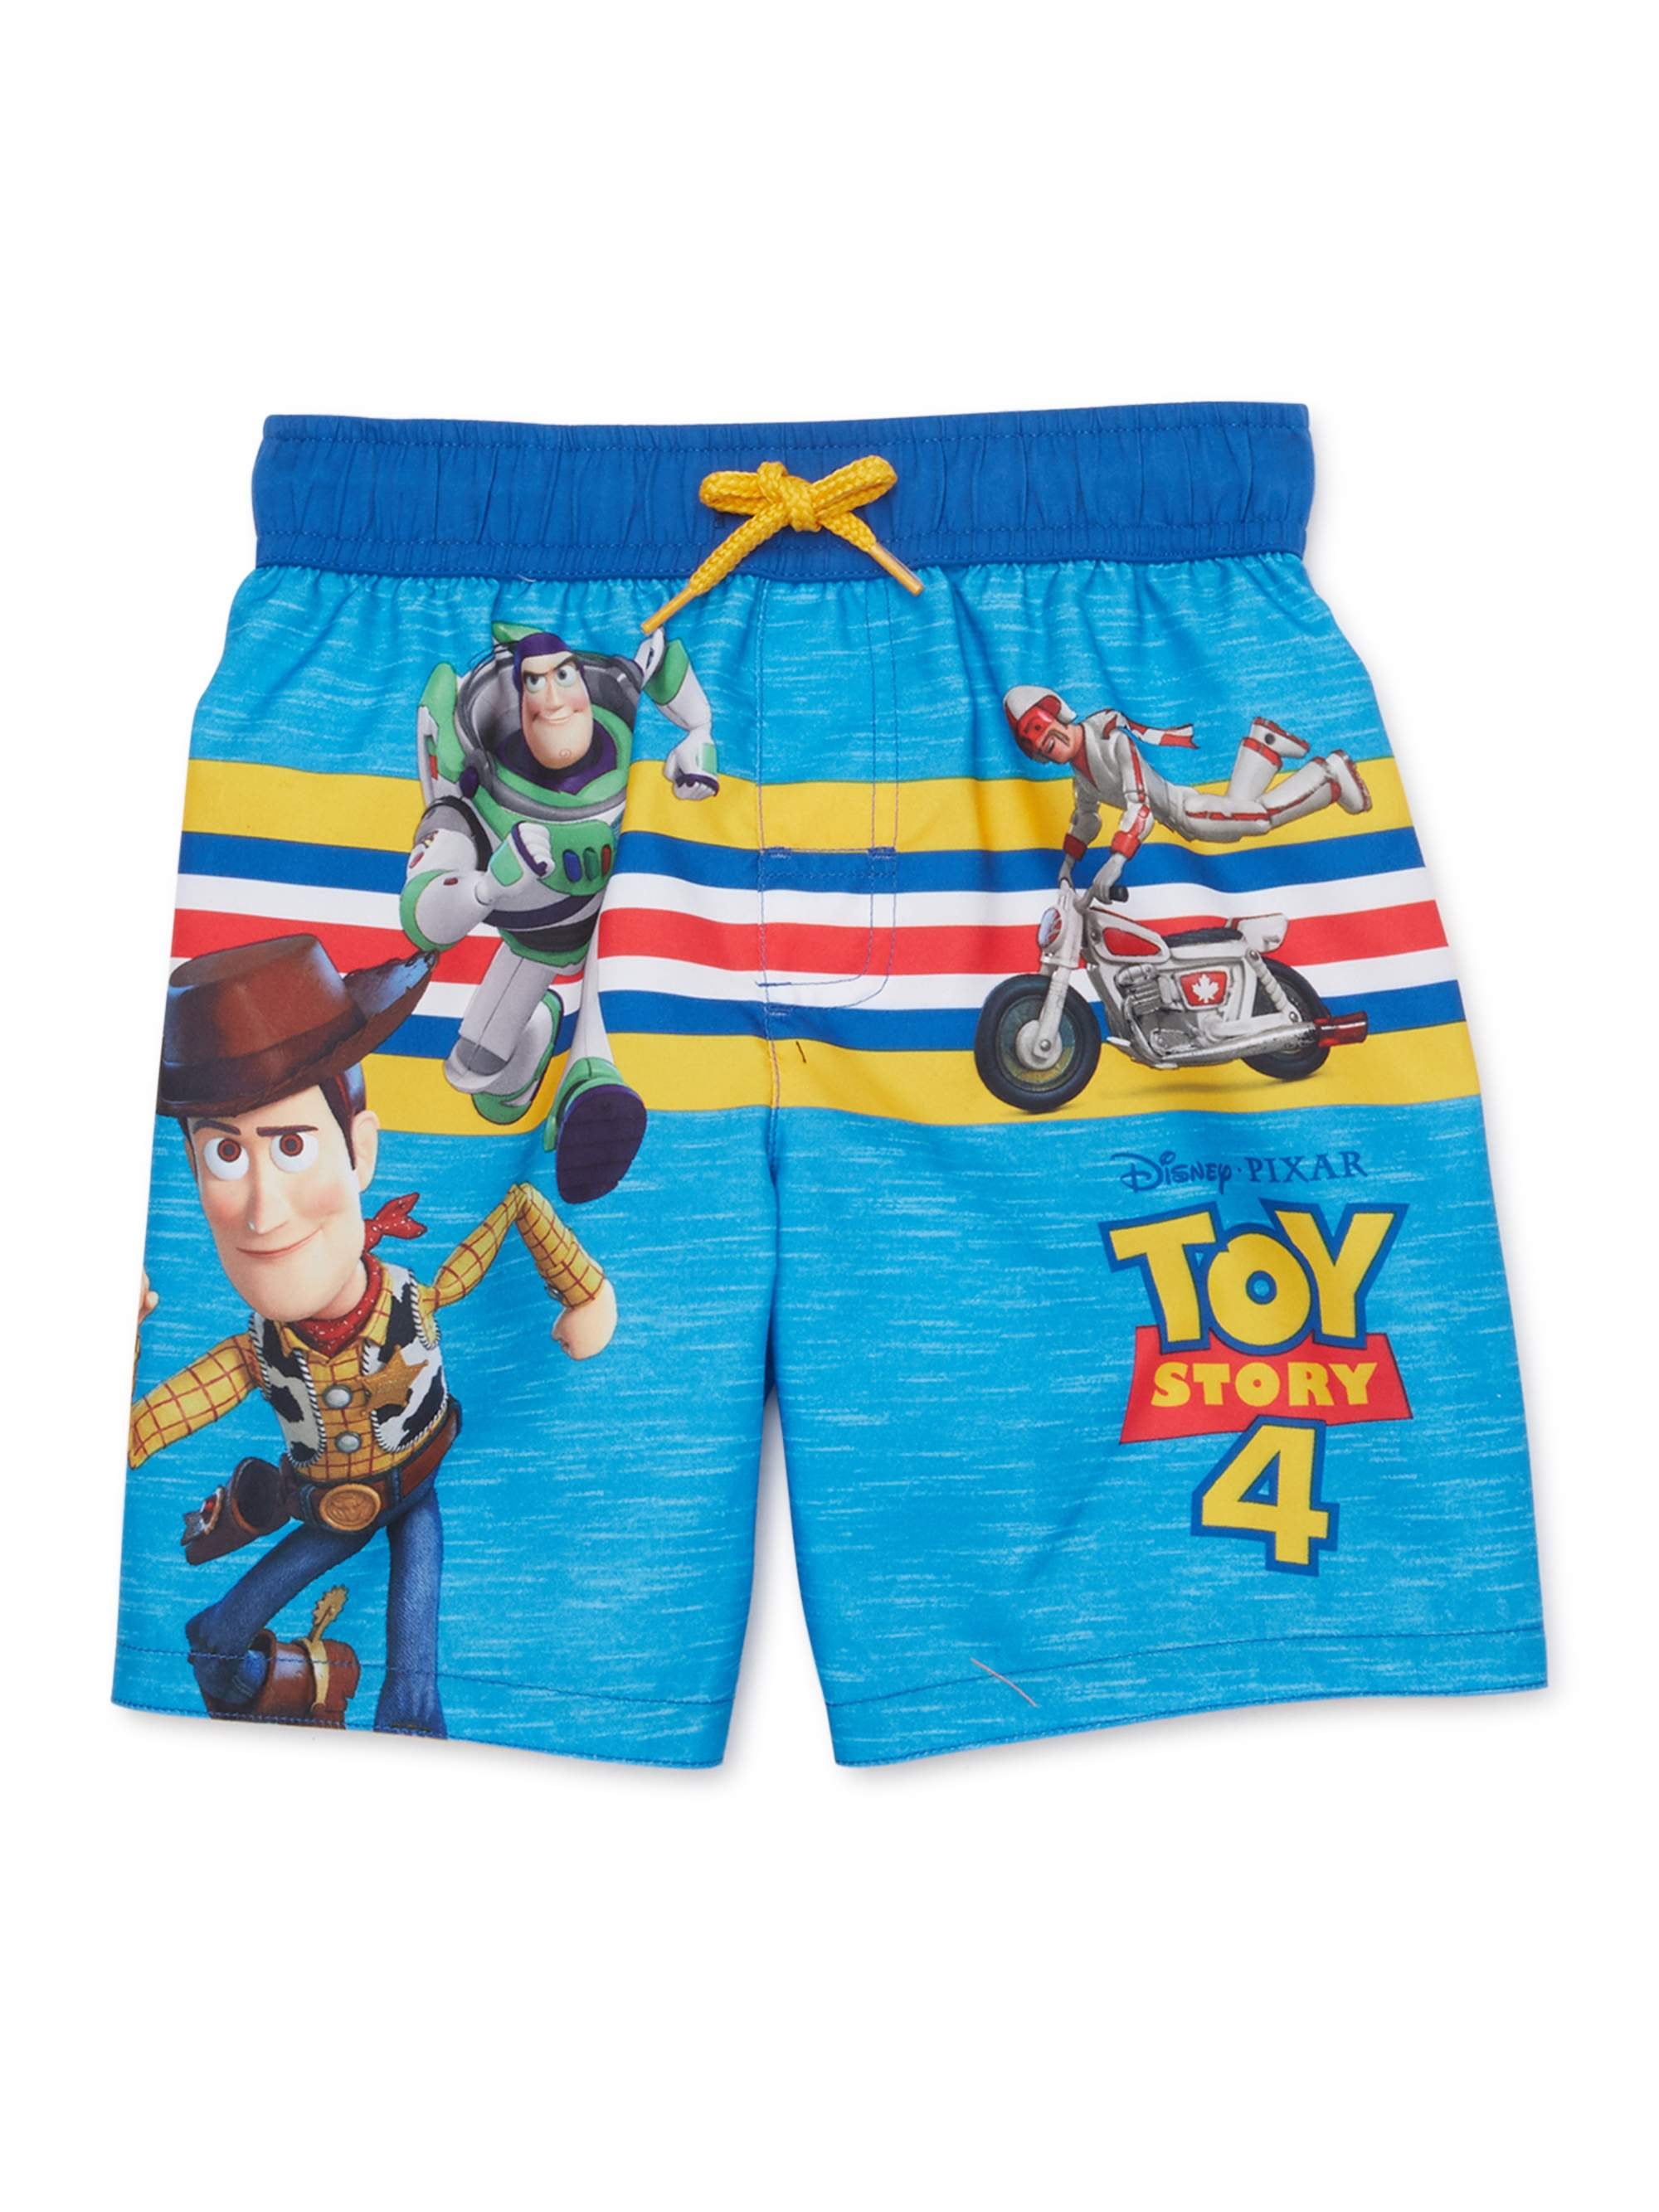 Disney Pixar Toy Story Buzz Lightyear Woody 3 Pack Swim Trunks Bathing Suit